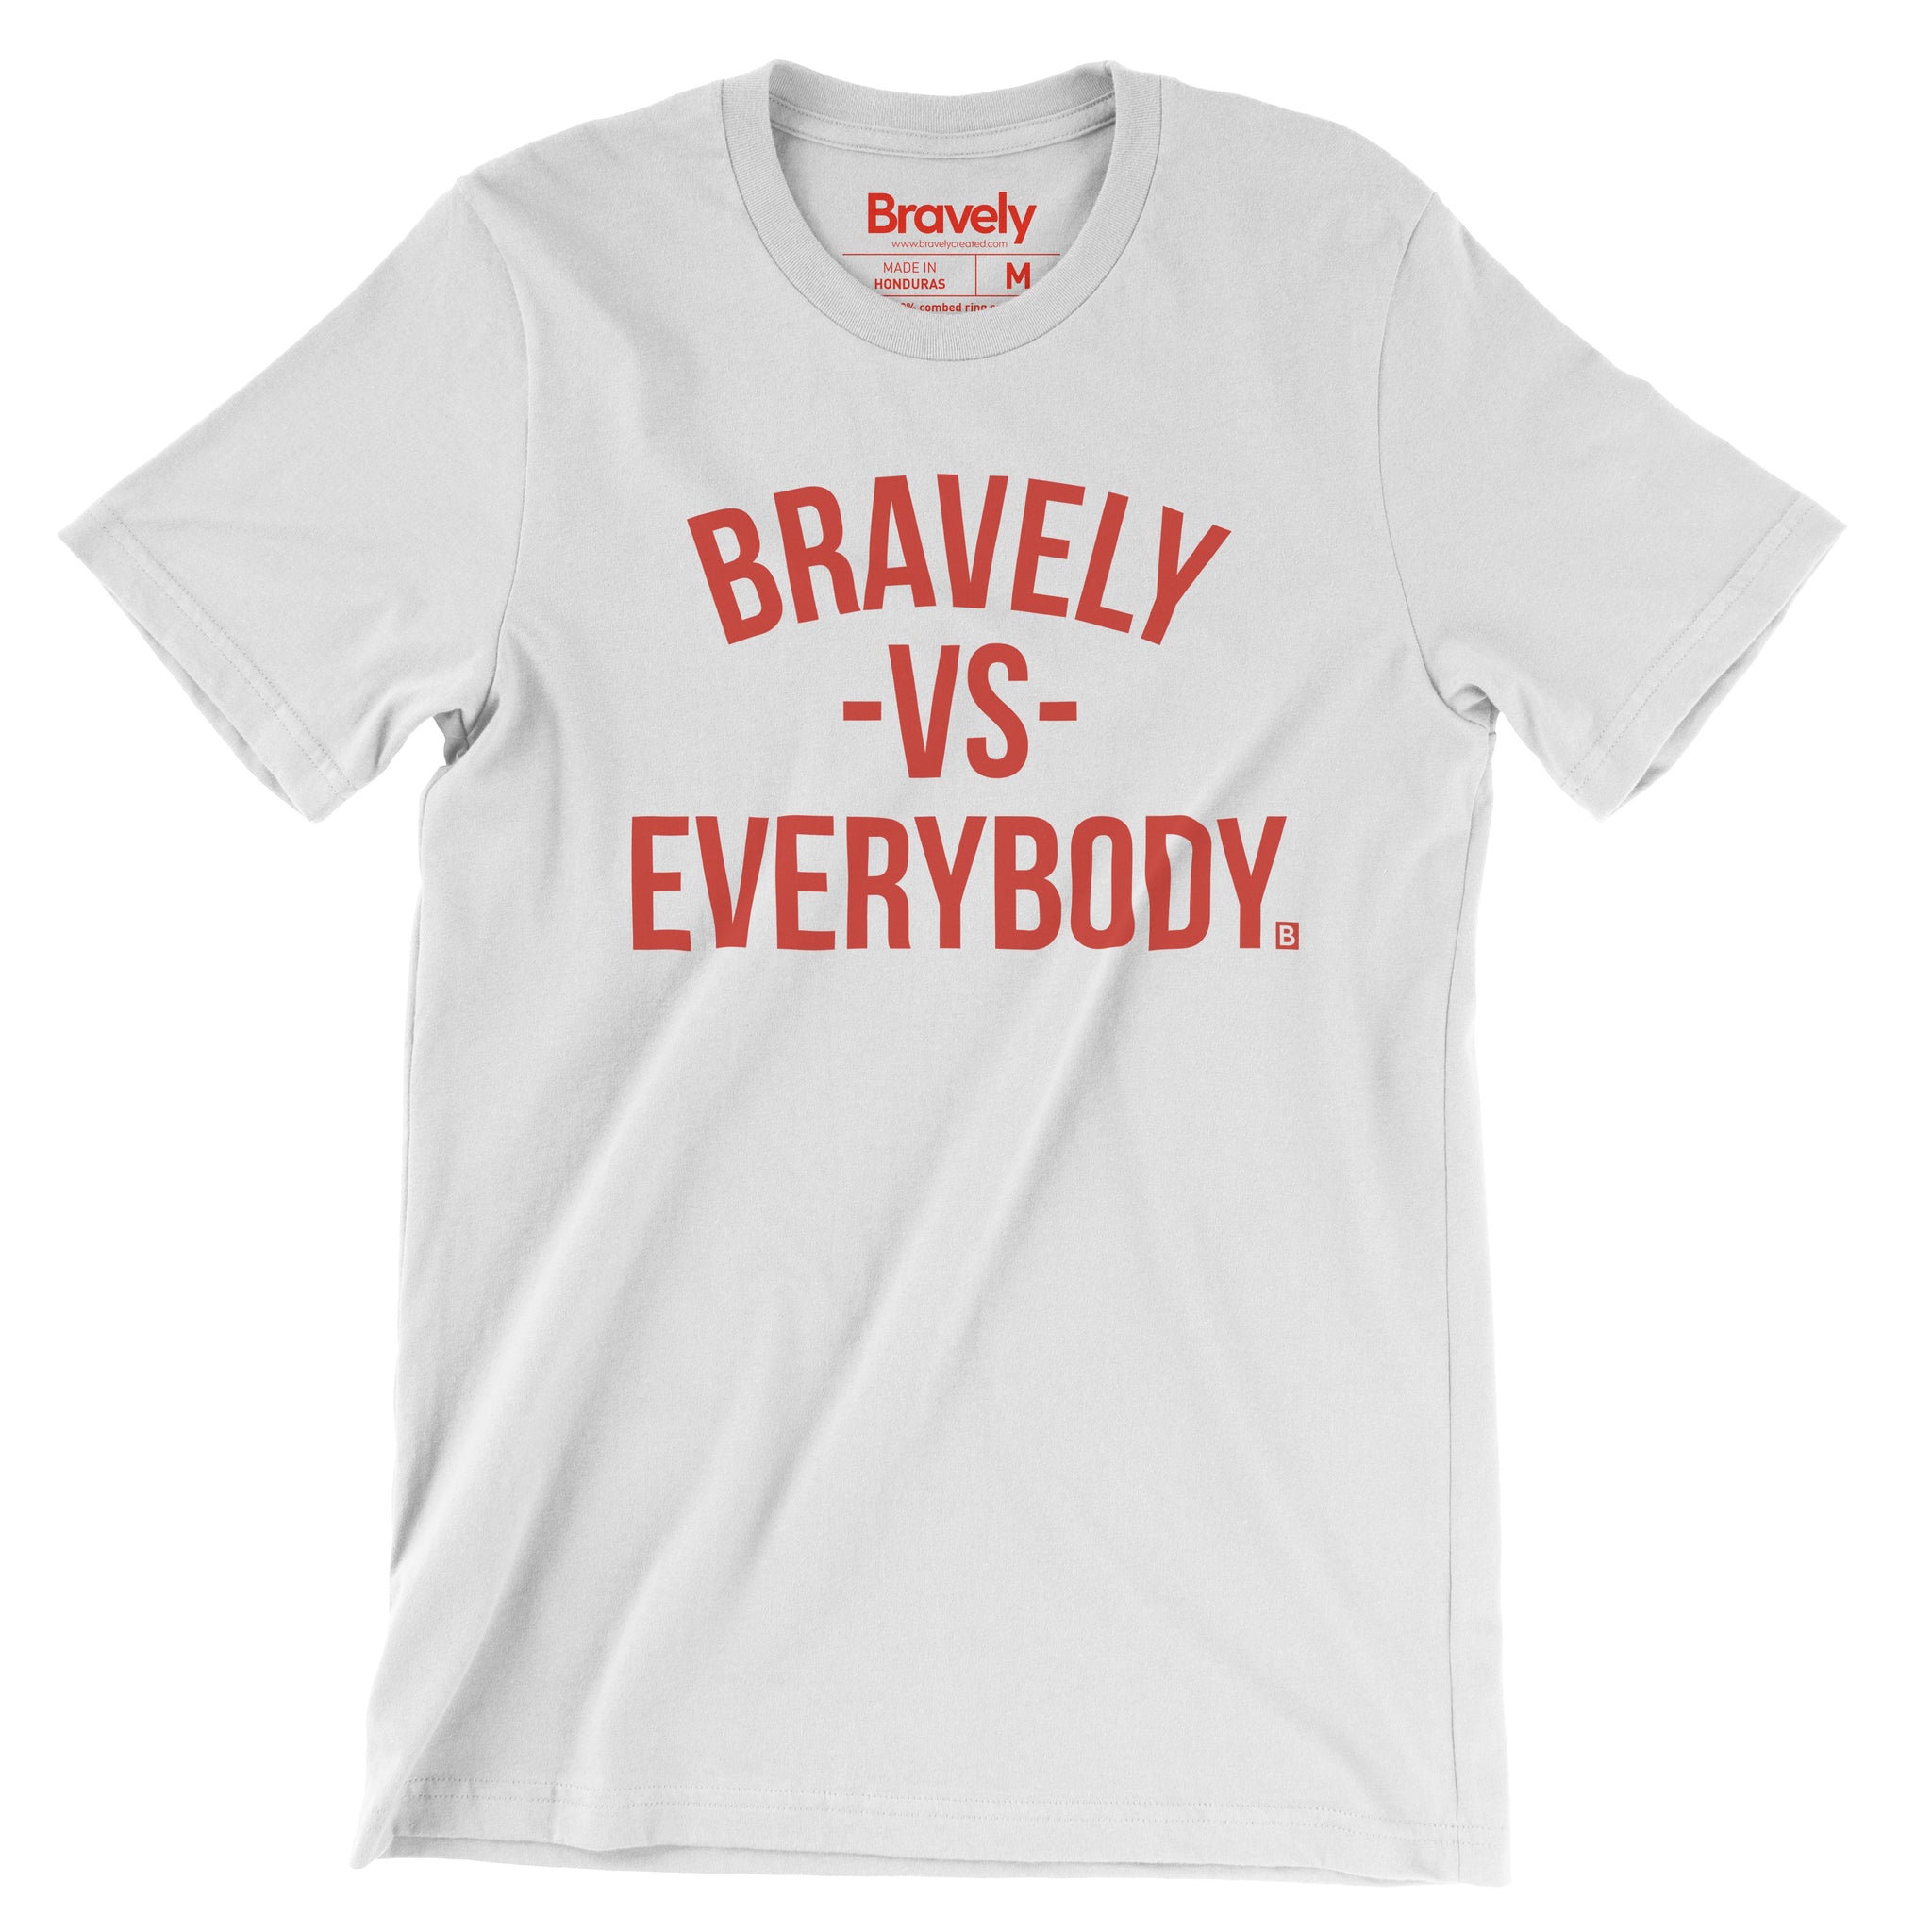 Bravely "Versus" T-Shirt